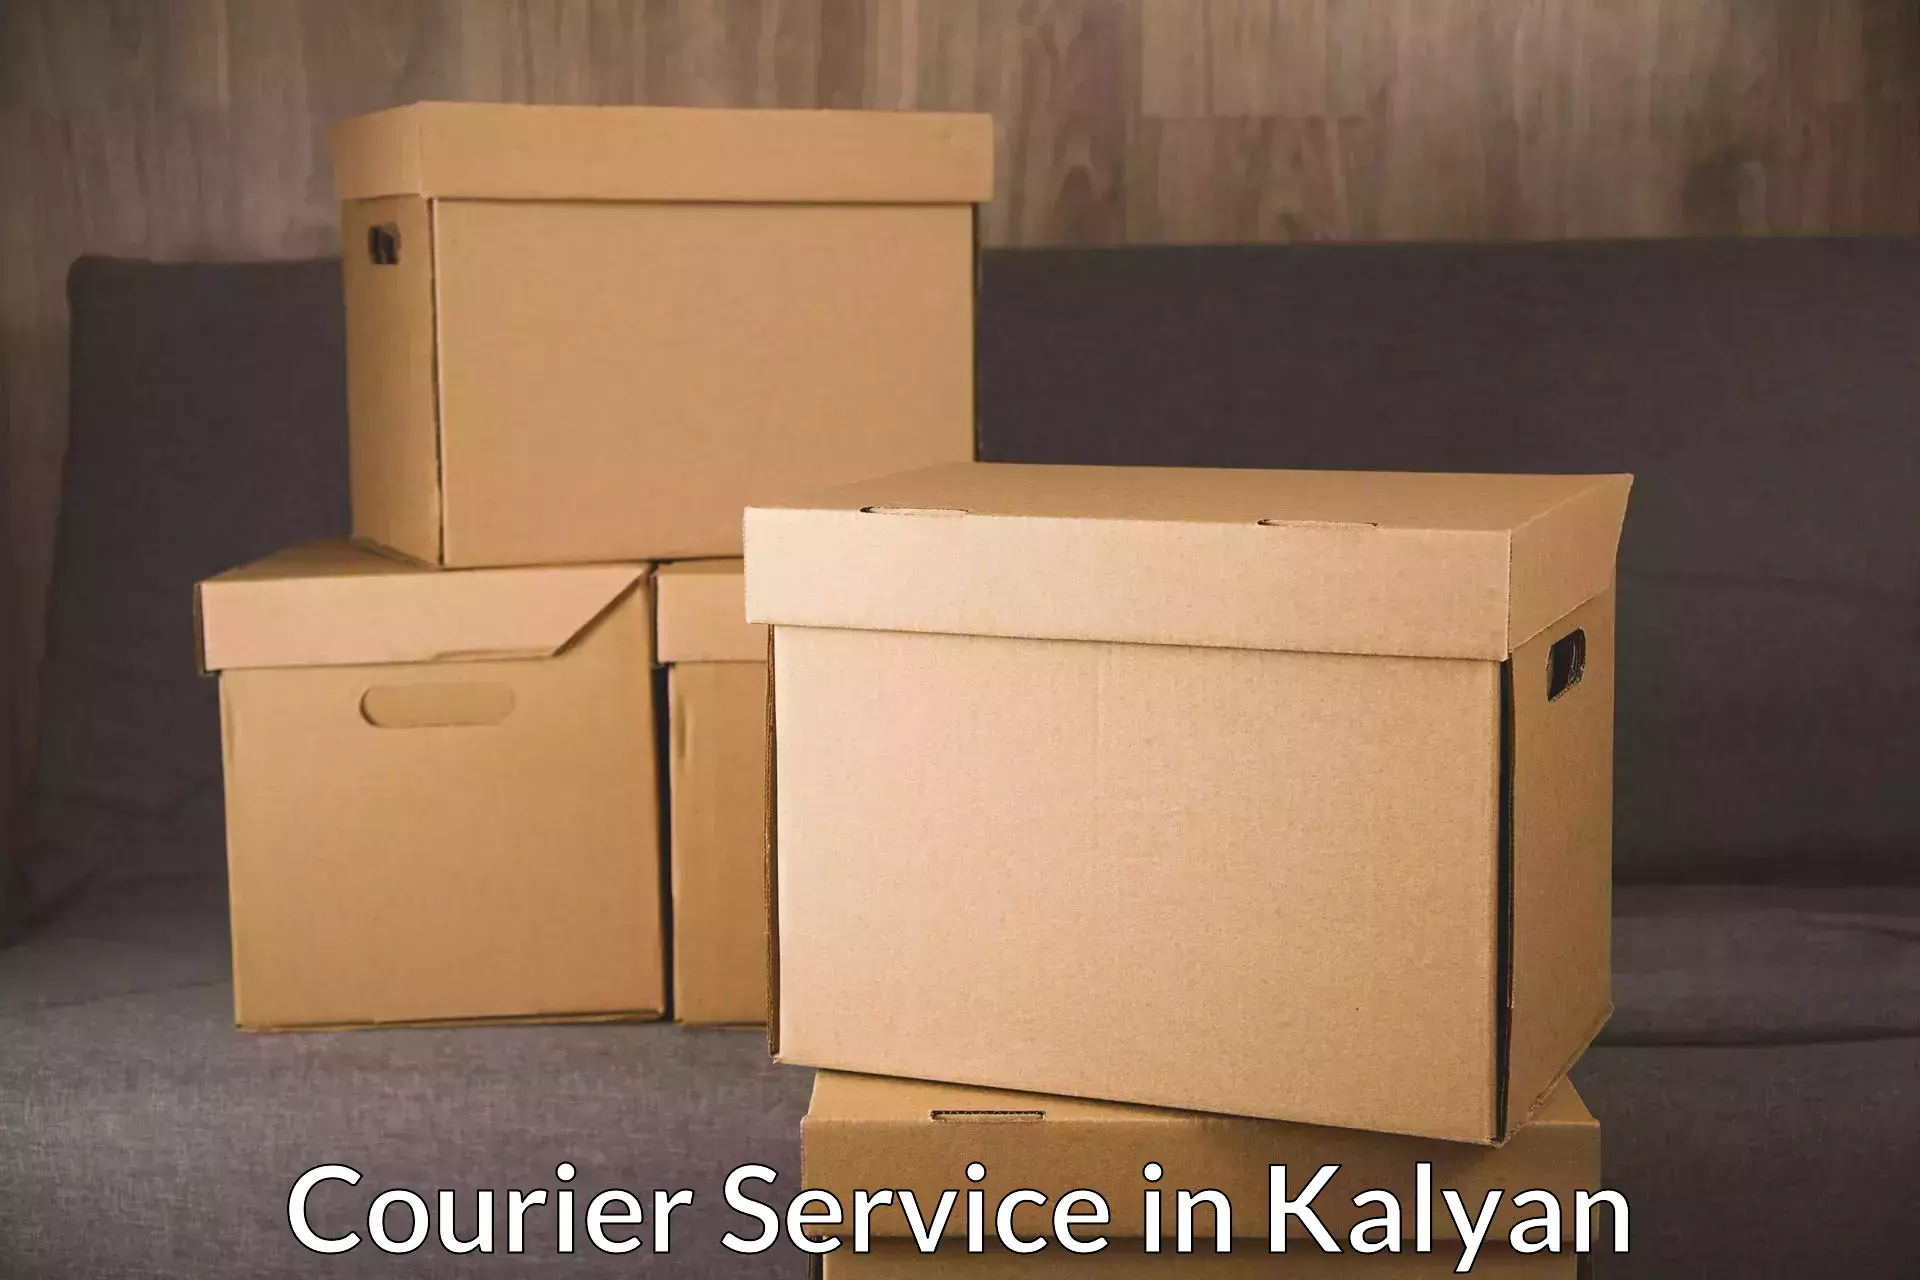 Customer-friendly courier services in Kalyan